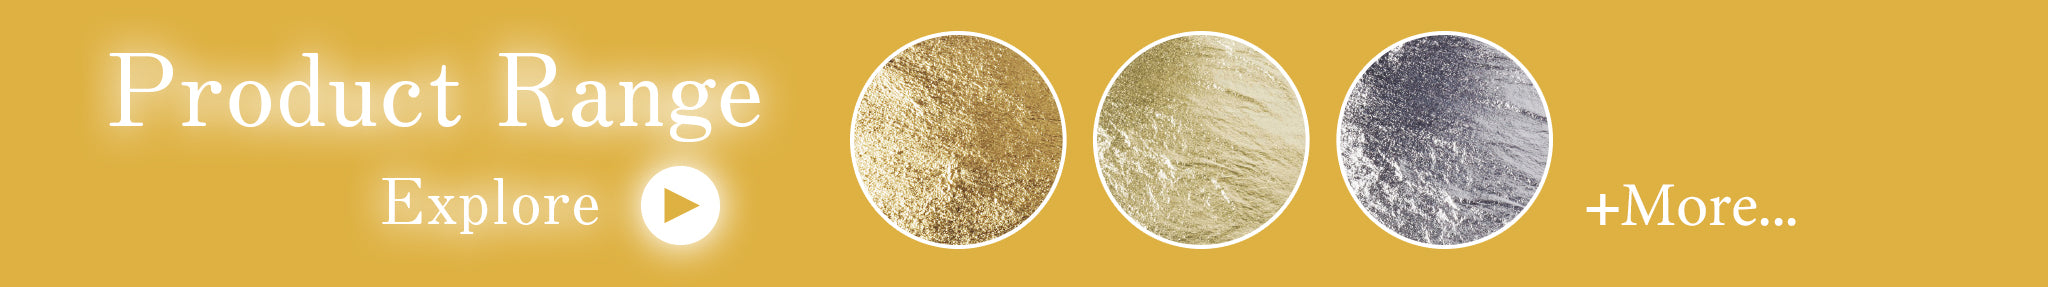 Edible Gold Leaf Flakes – Midas Gold Leaf